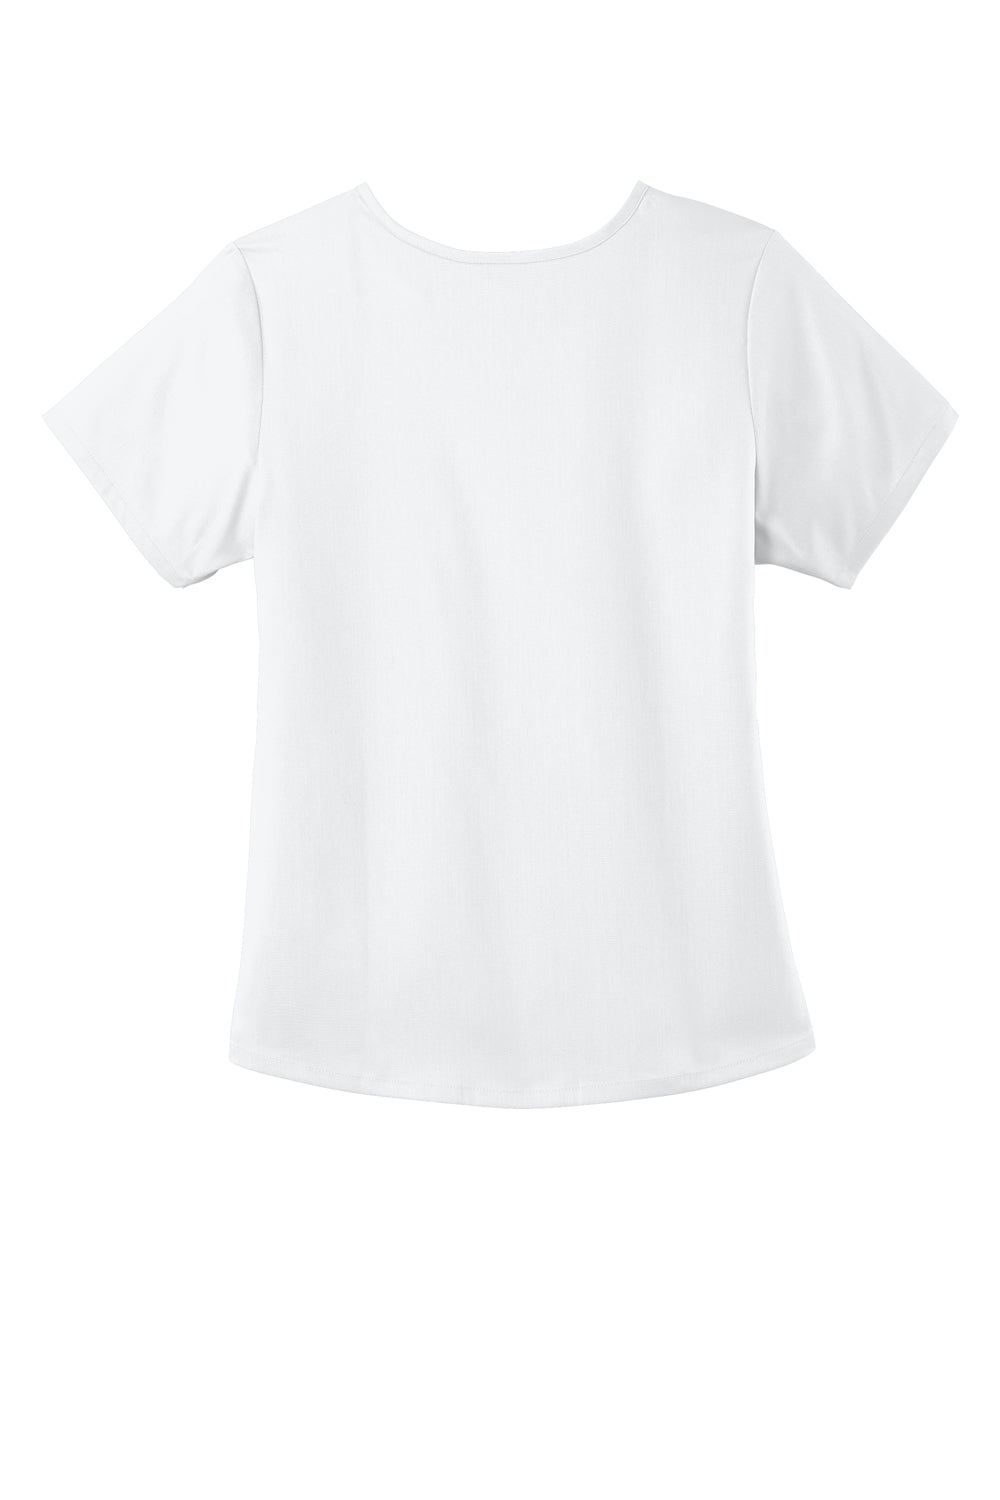 Wonderwink WW4268 Premiere Flex Short Sleeve V-Neck Mock Wrap Shirt White Flat Back